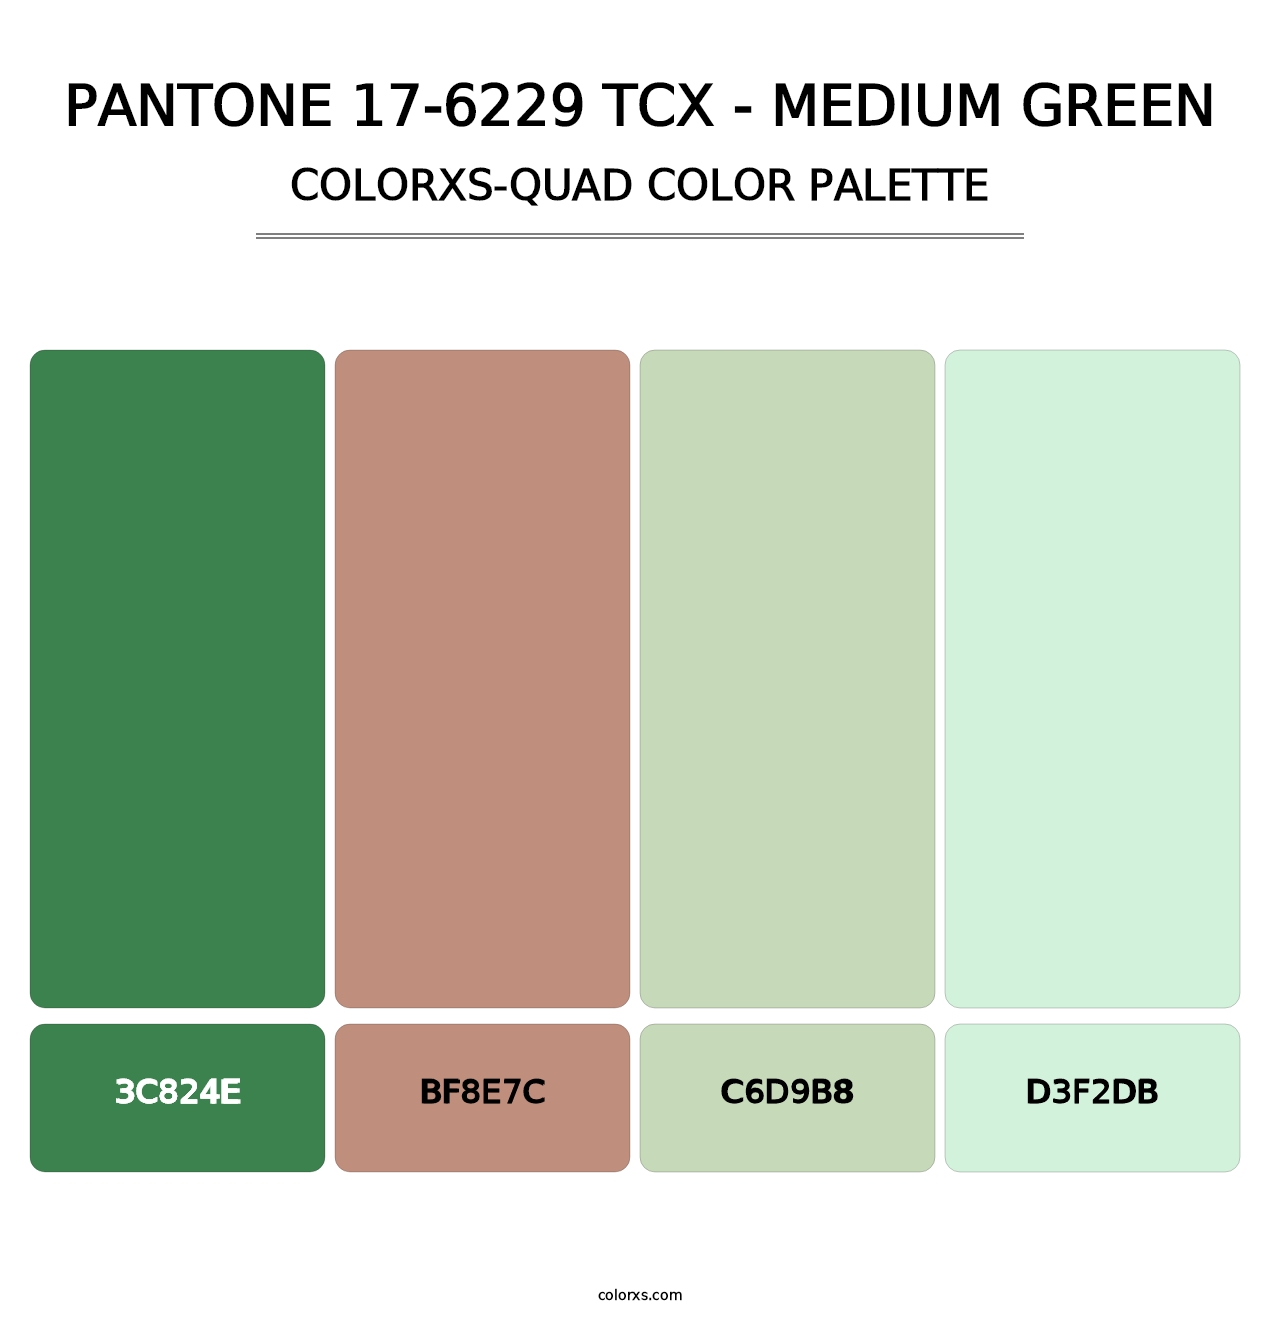 PANTONE 17-6229 TCX - Medium Green - Colorxs Quad Palette